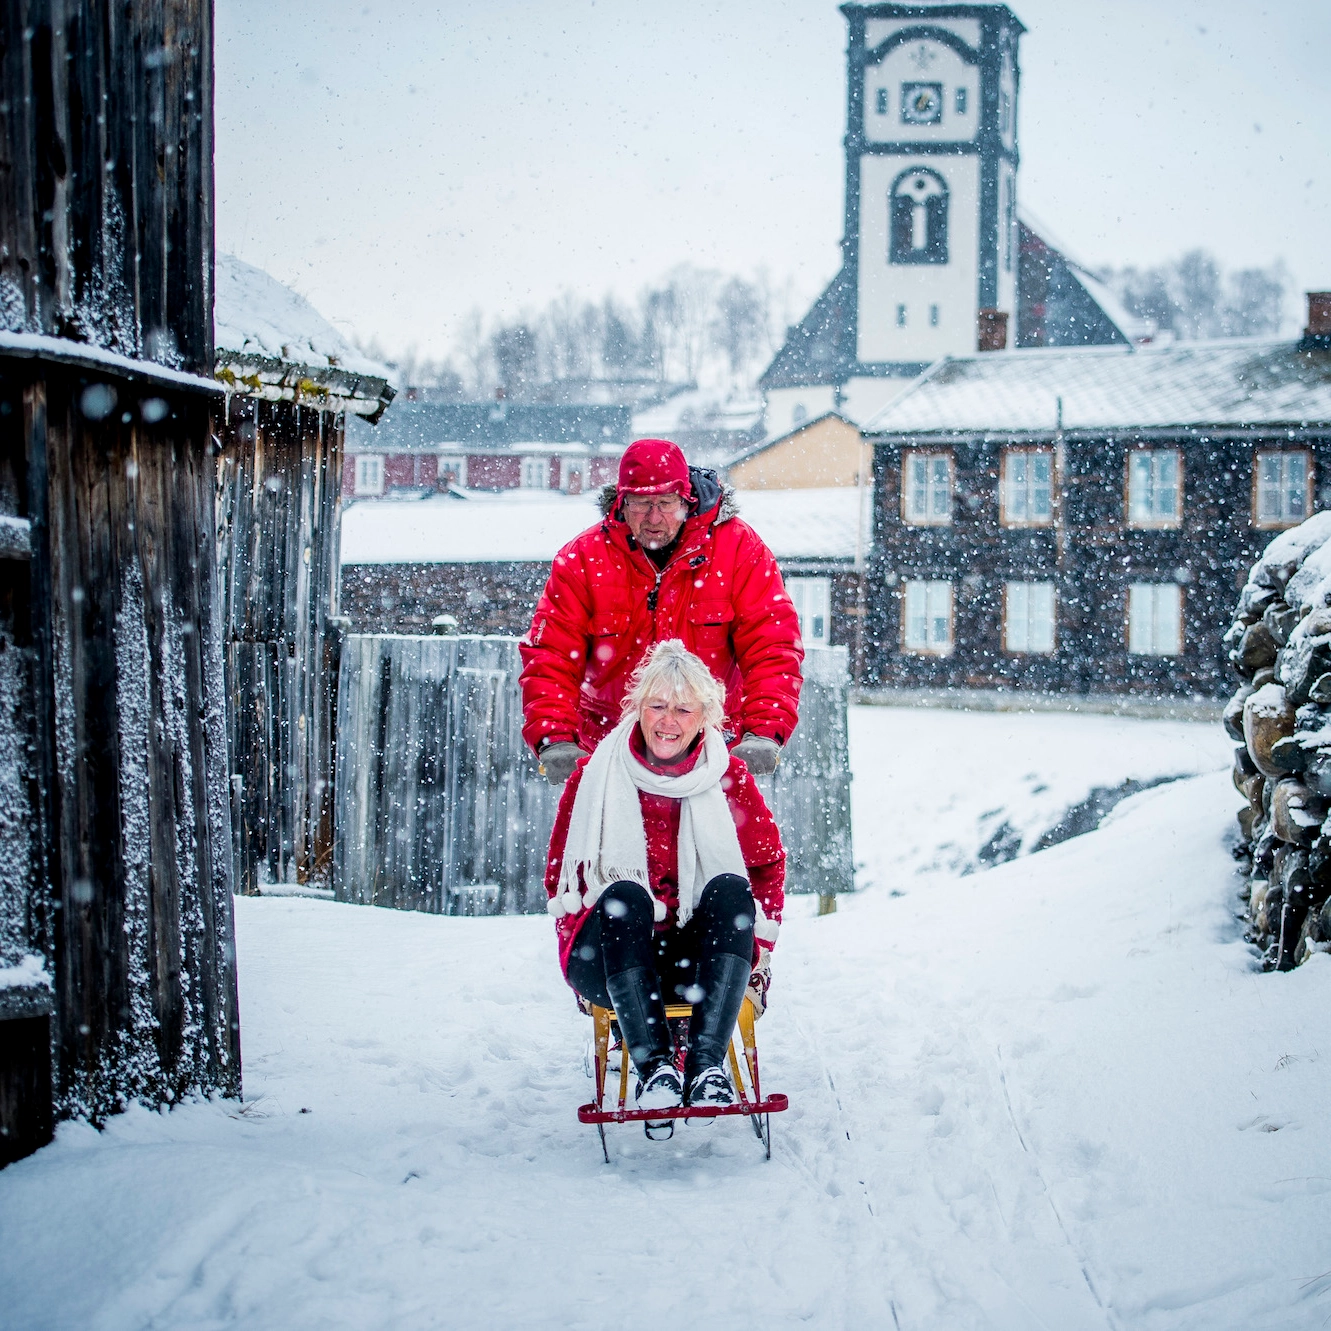 Røros winter - Norway